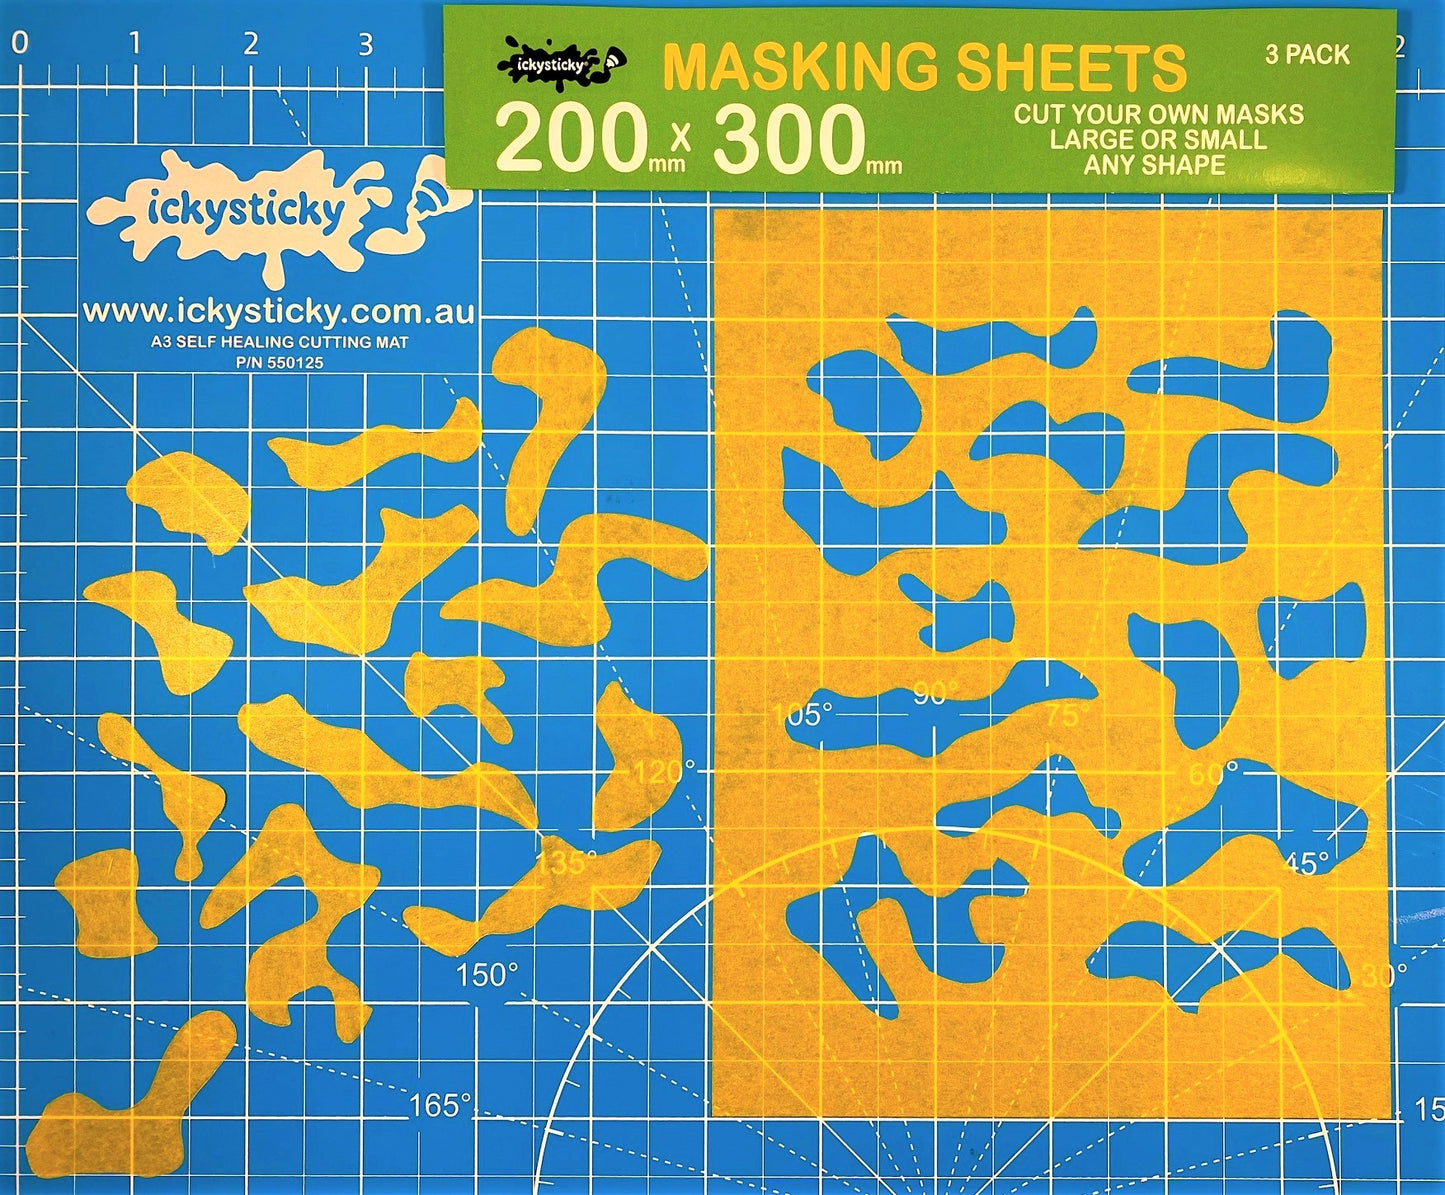 Ickysticky Masking Sheets 200mm x 300mm